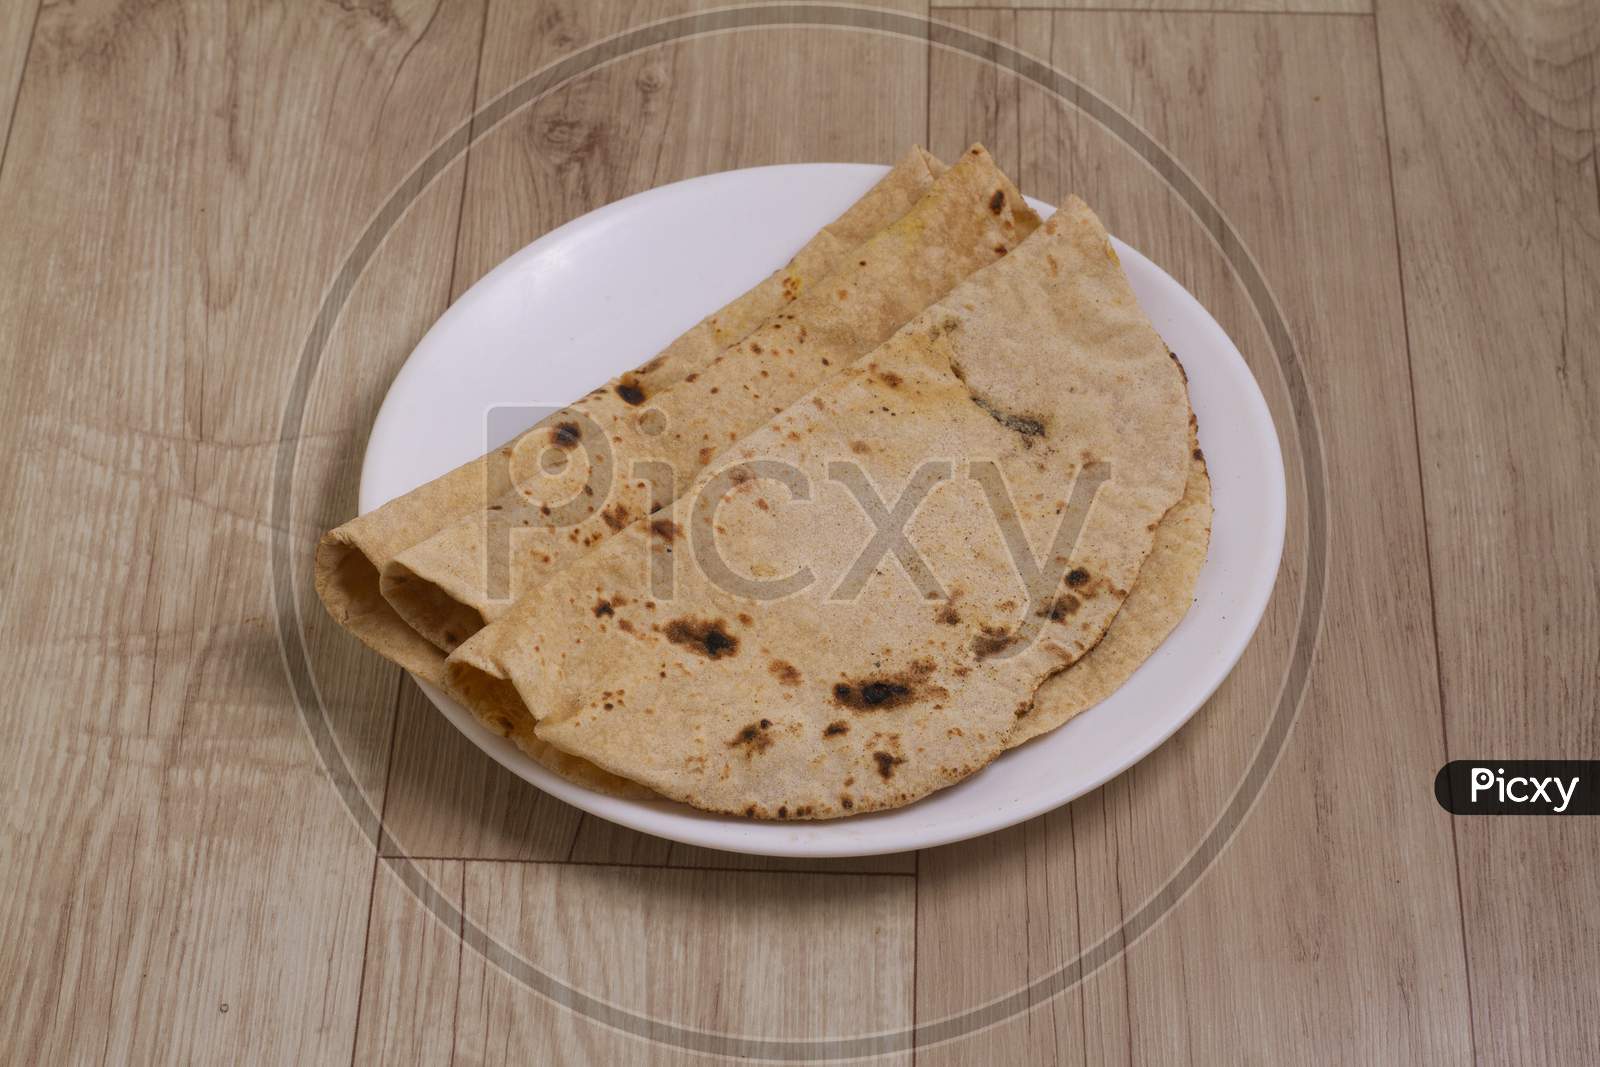 Indian Traditional Cuisine Chapati, Roti, Fulka, Indian Bread, Flatbread, Whole Wheat Flat Bread, Chapathi, Wheaten Flat Bread, Chapatti, Or Chappathi